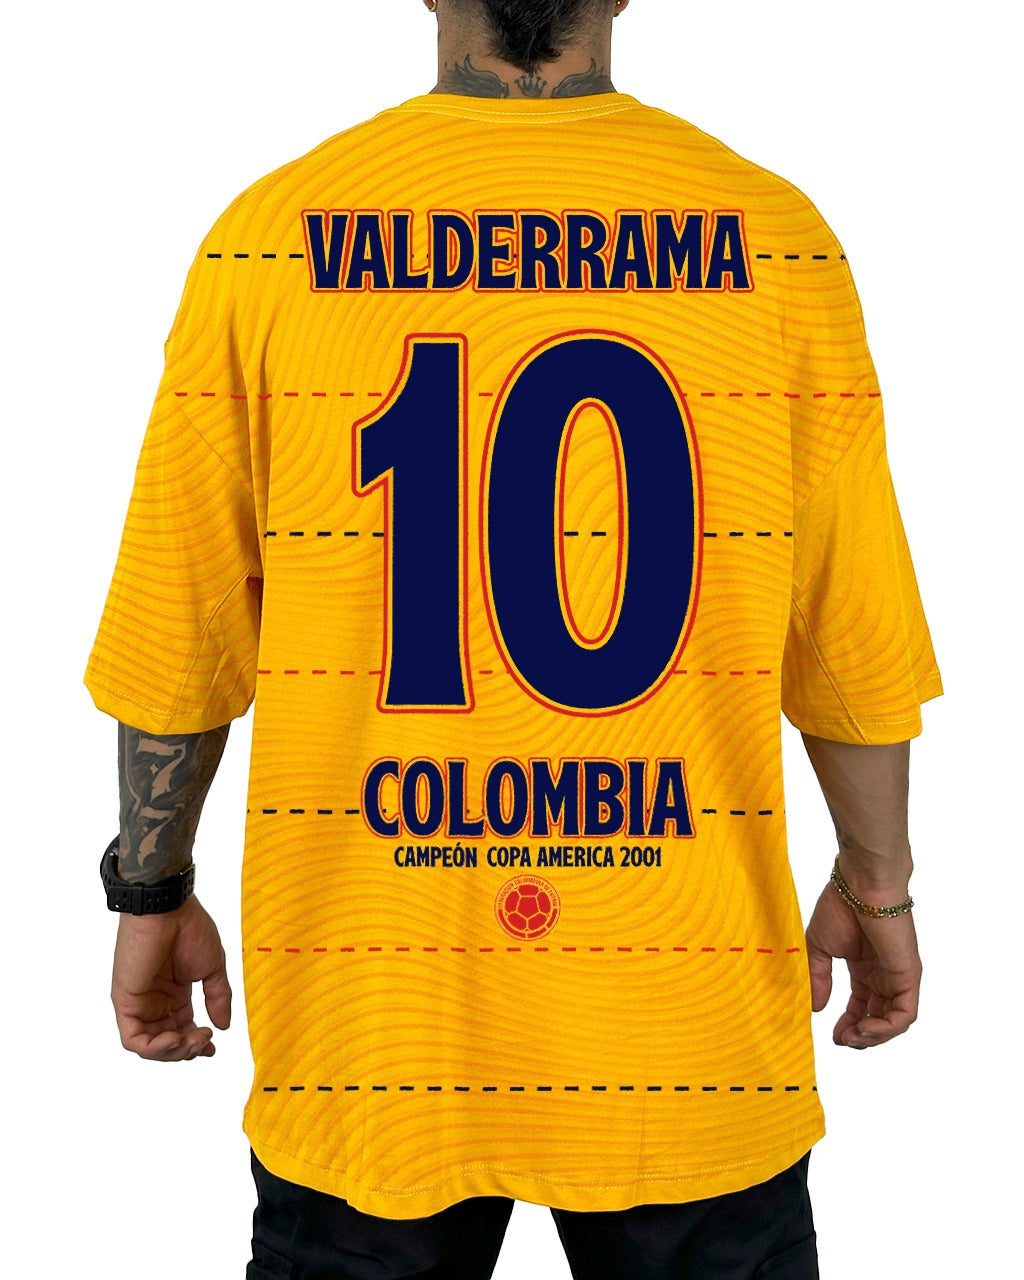 Oversize Colombia Valderrama